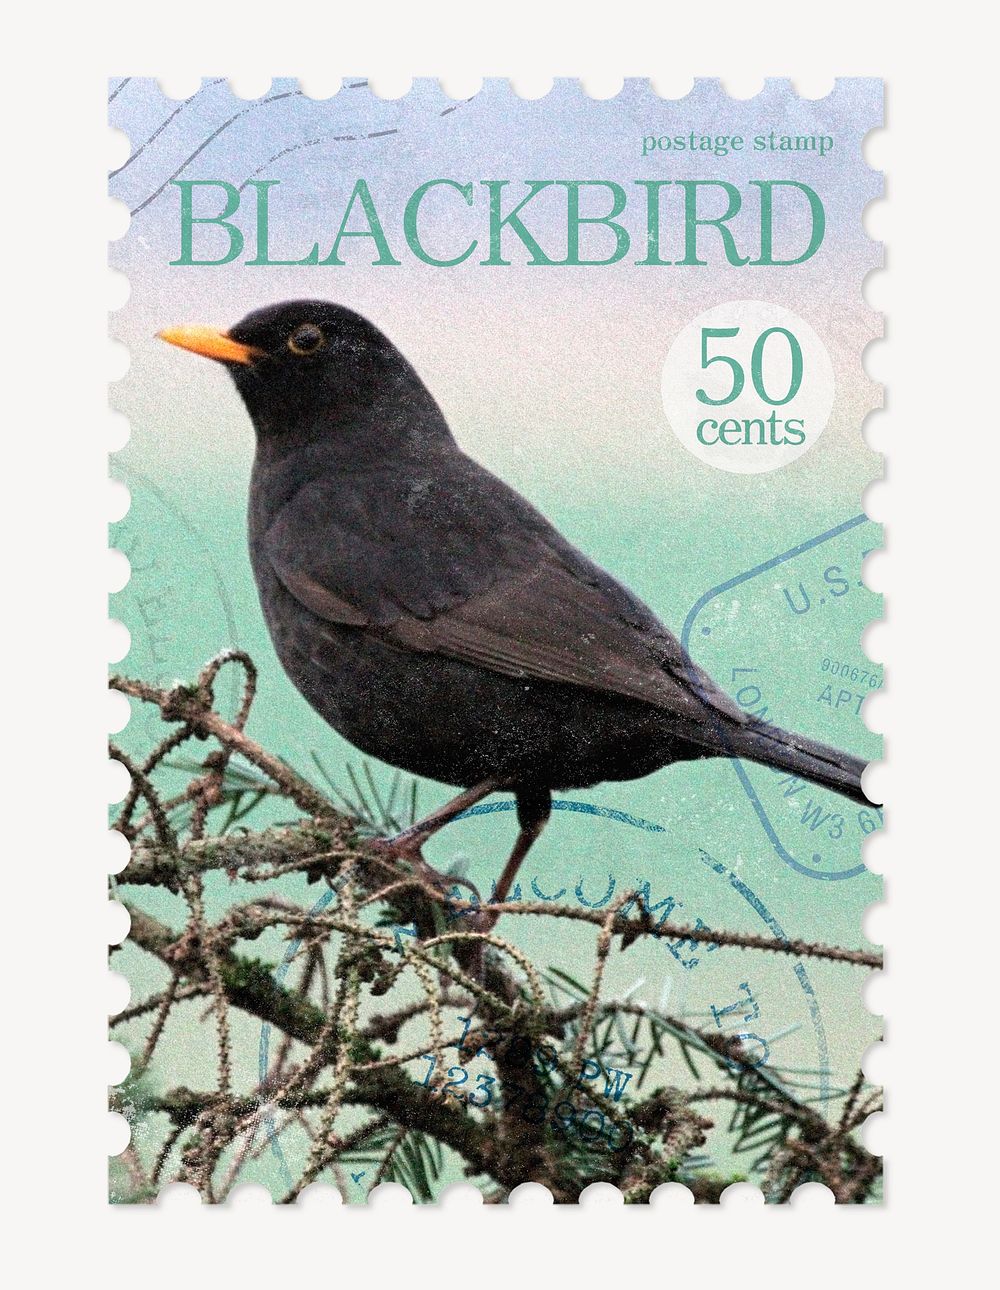 Black bird postage stamp, aesthetic animal graphic